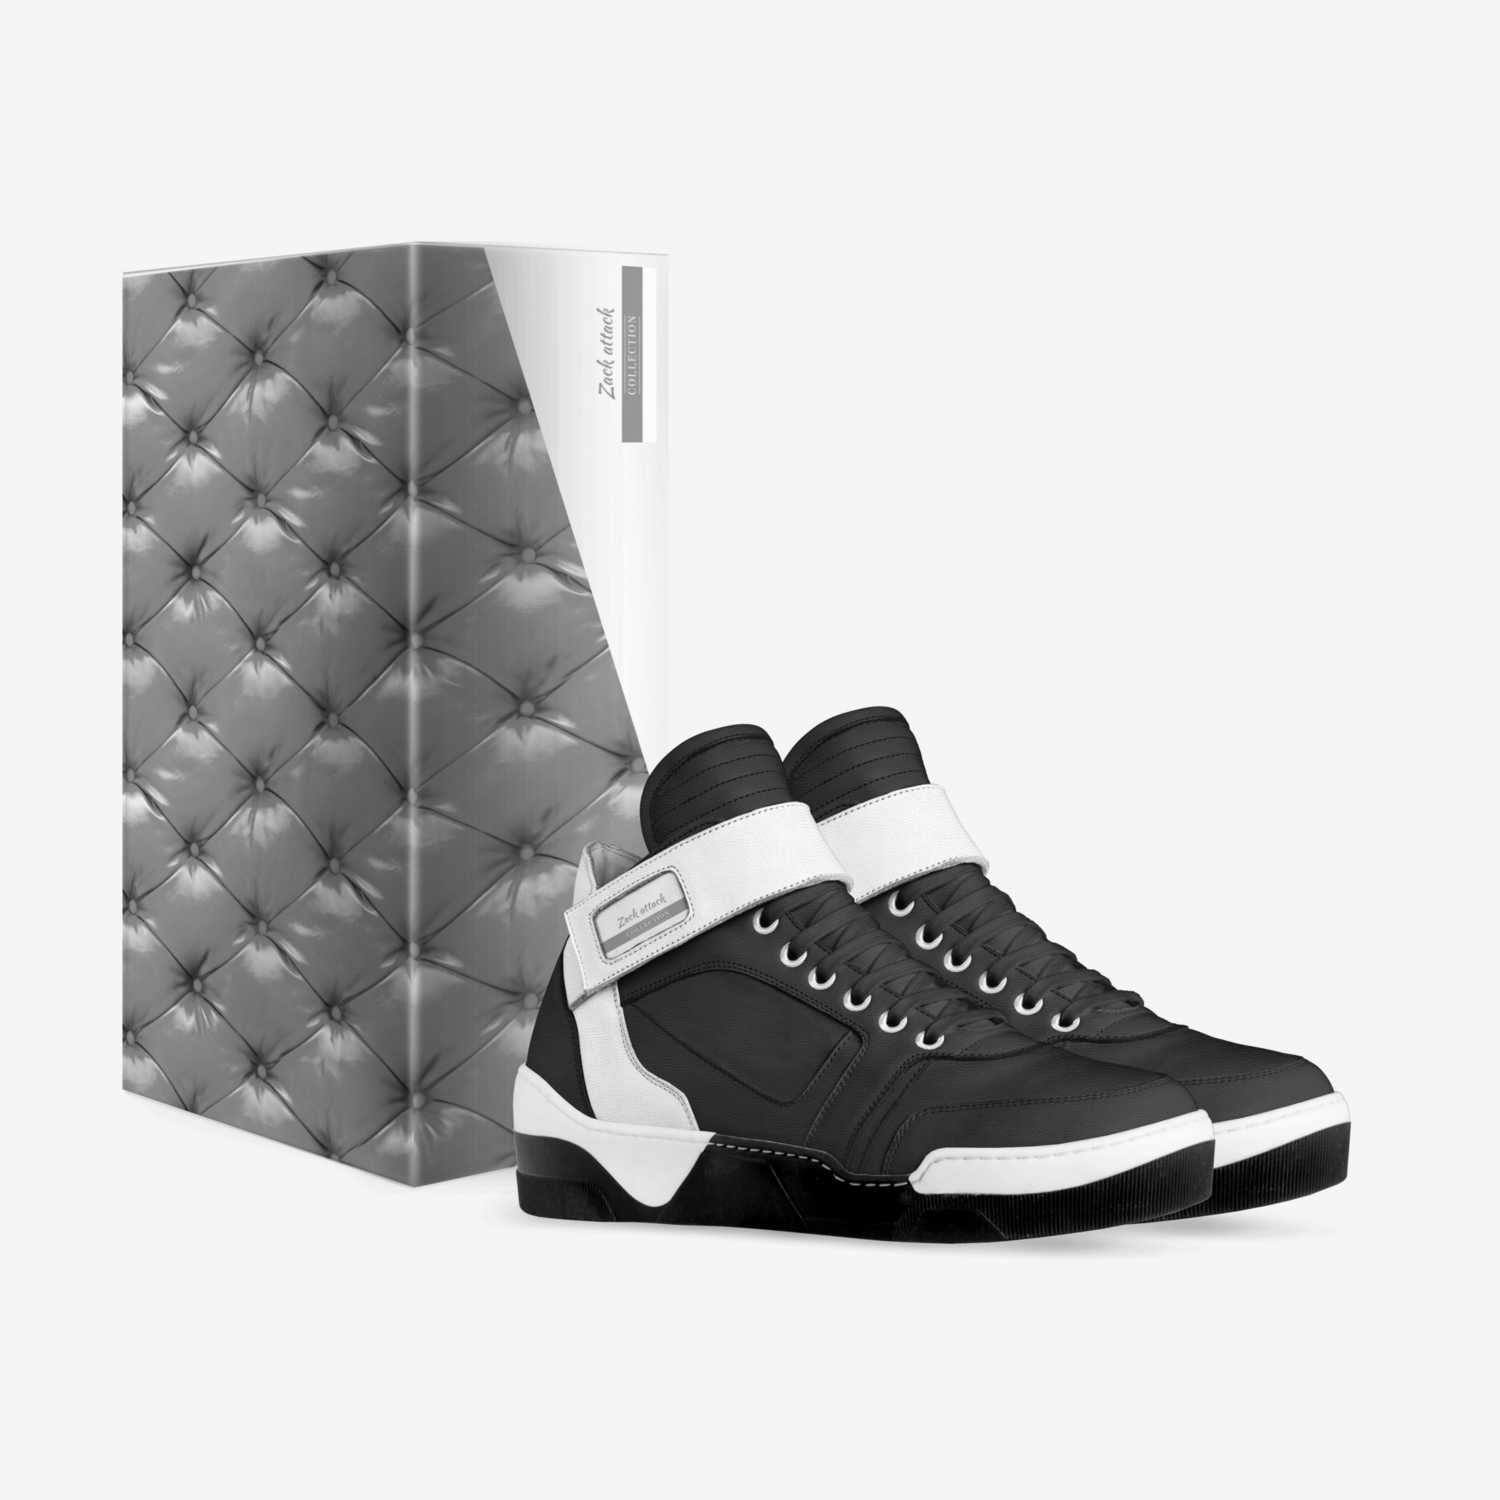 Zack attack custom made in Italy shoes by John Alvarez | Box view